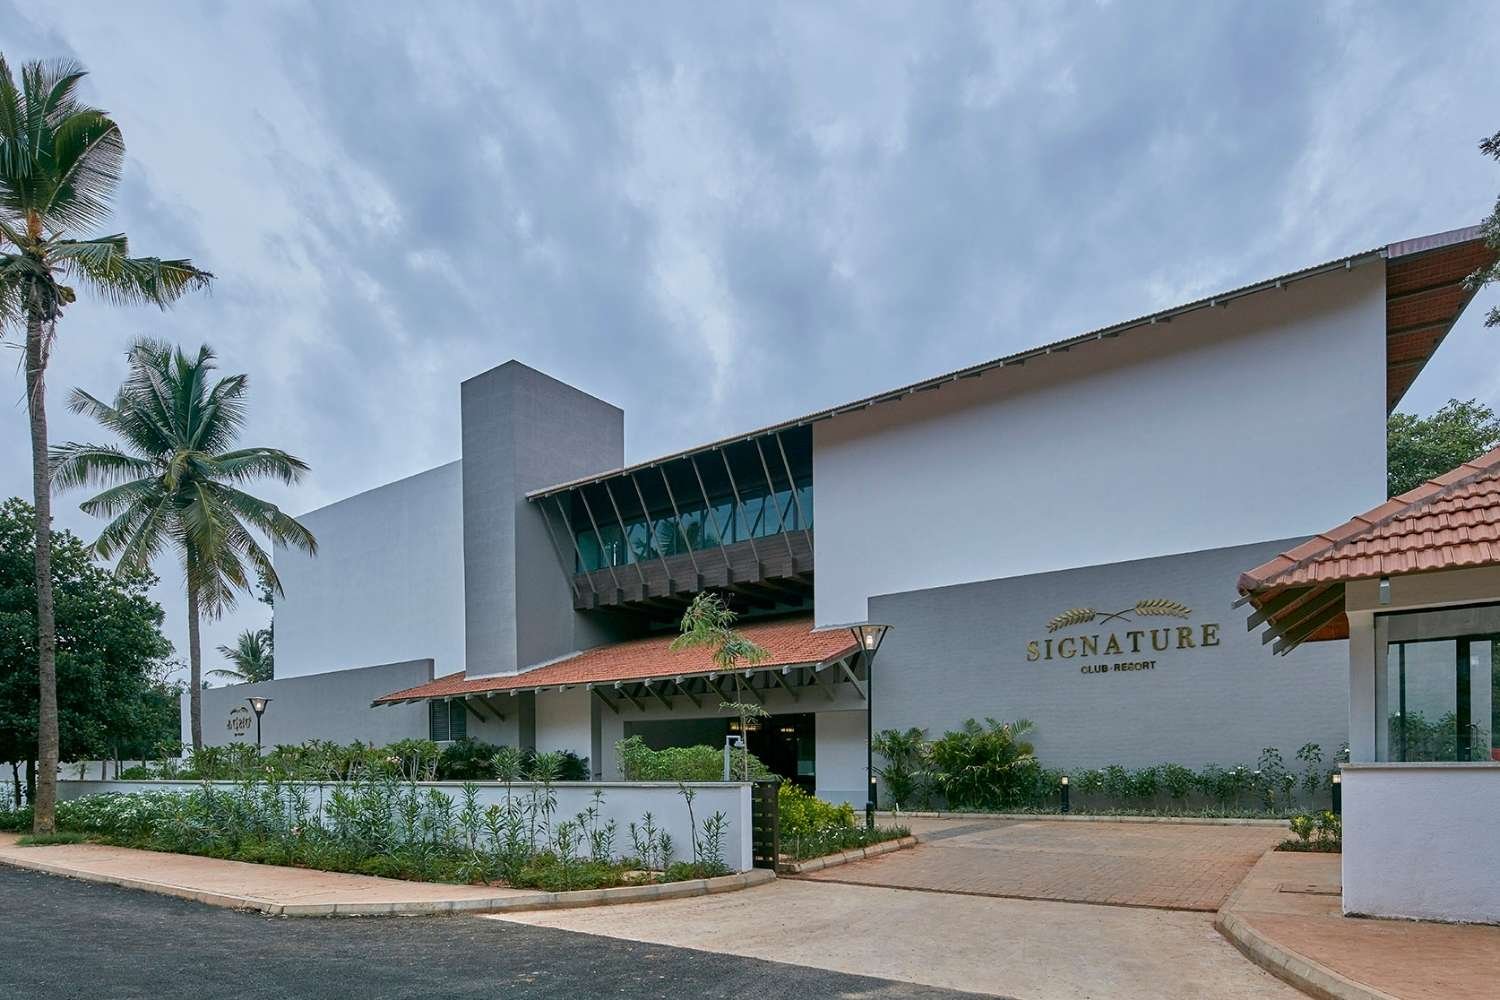 Signature Club Resort, a majestic wedding resort in Bangalore